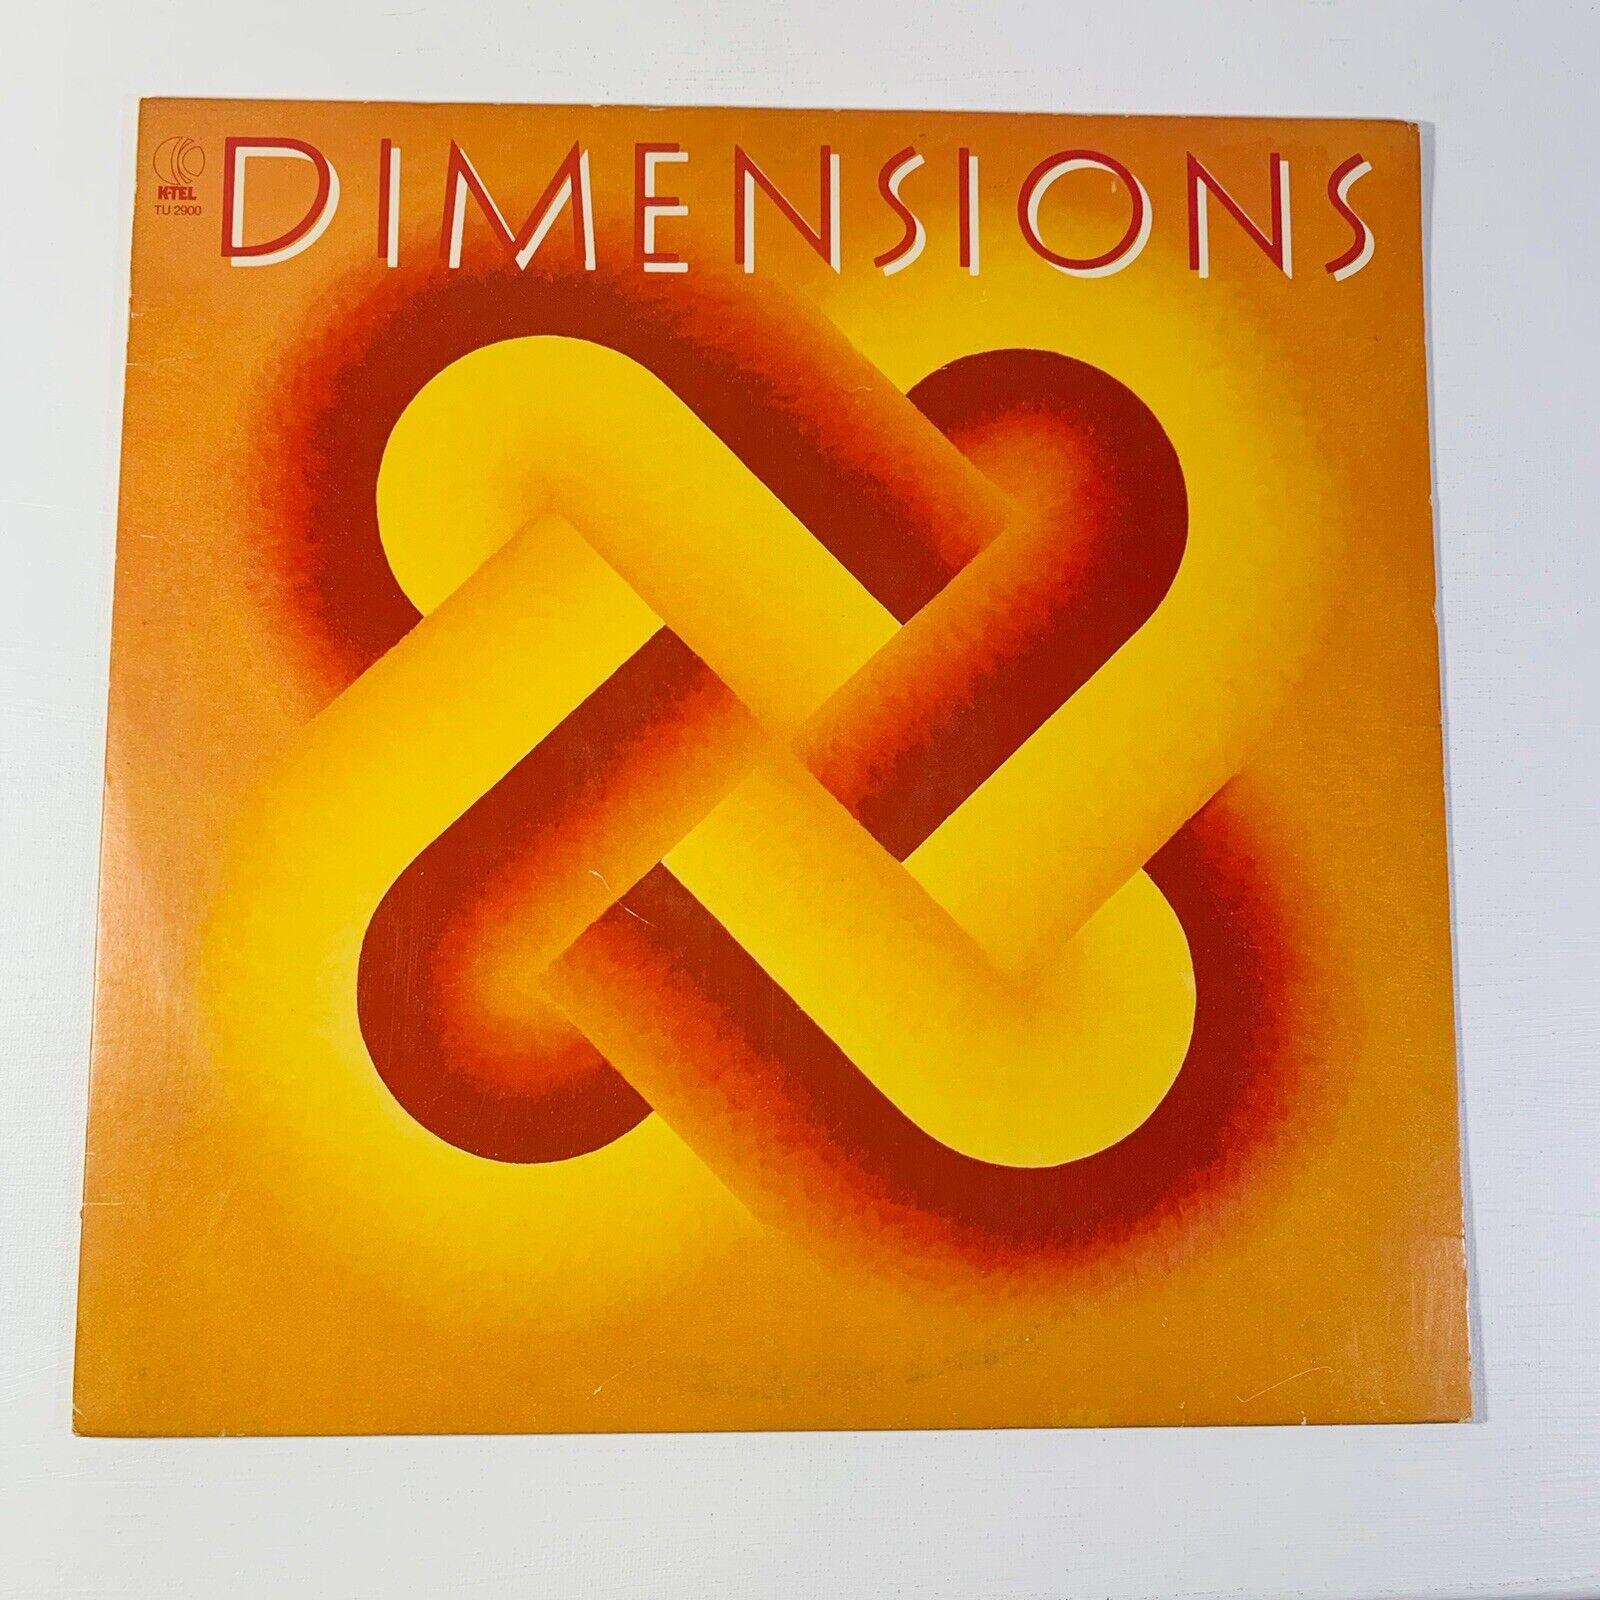 Dimensions Vinyl TU2900 KTEL Various Artists &0s Hits Record Album Vintage